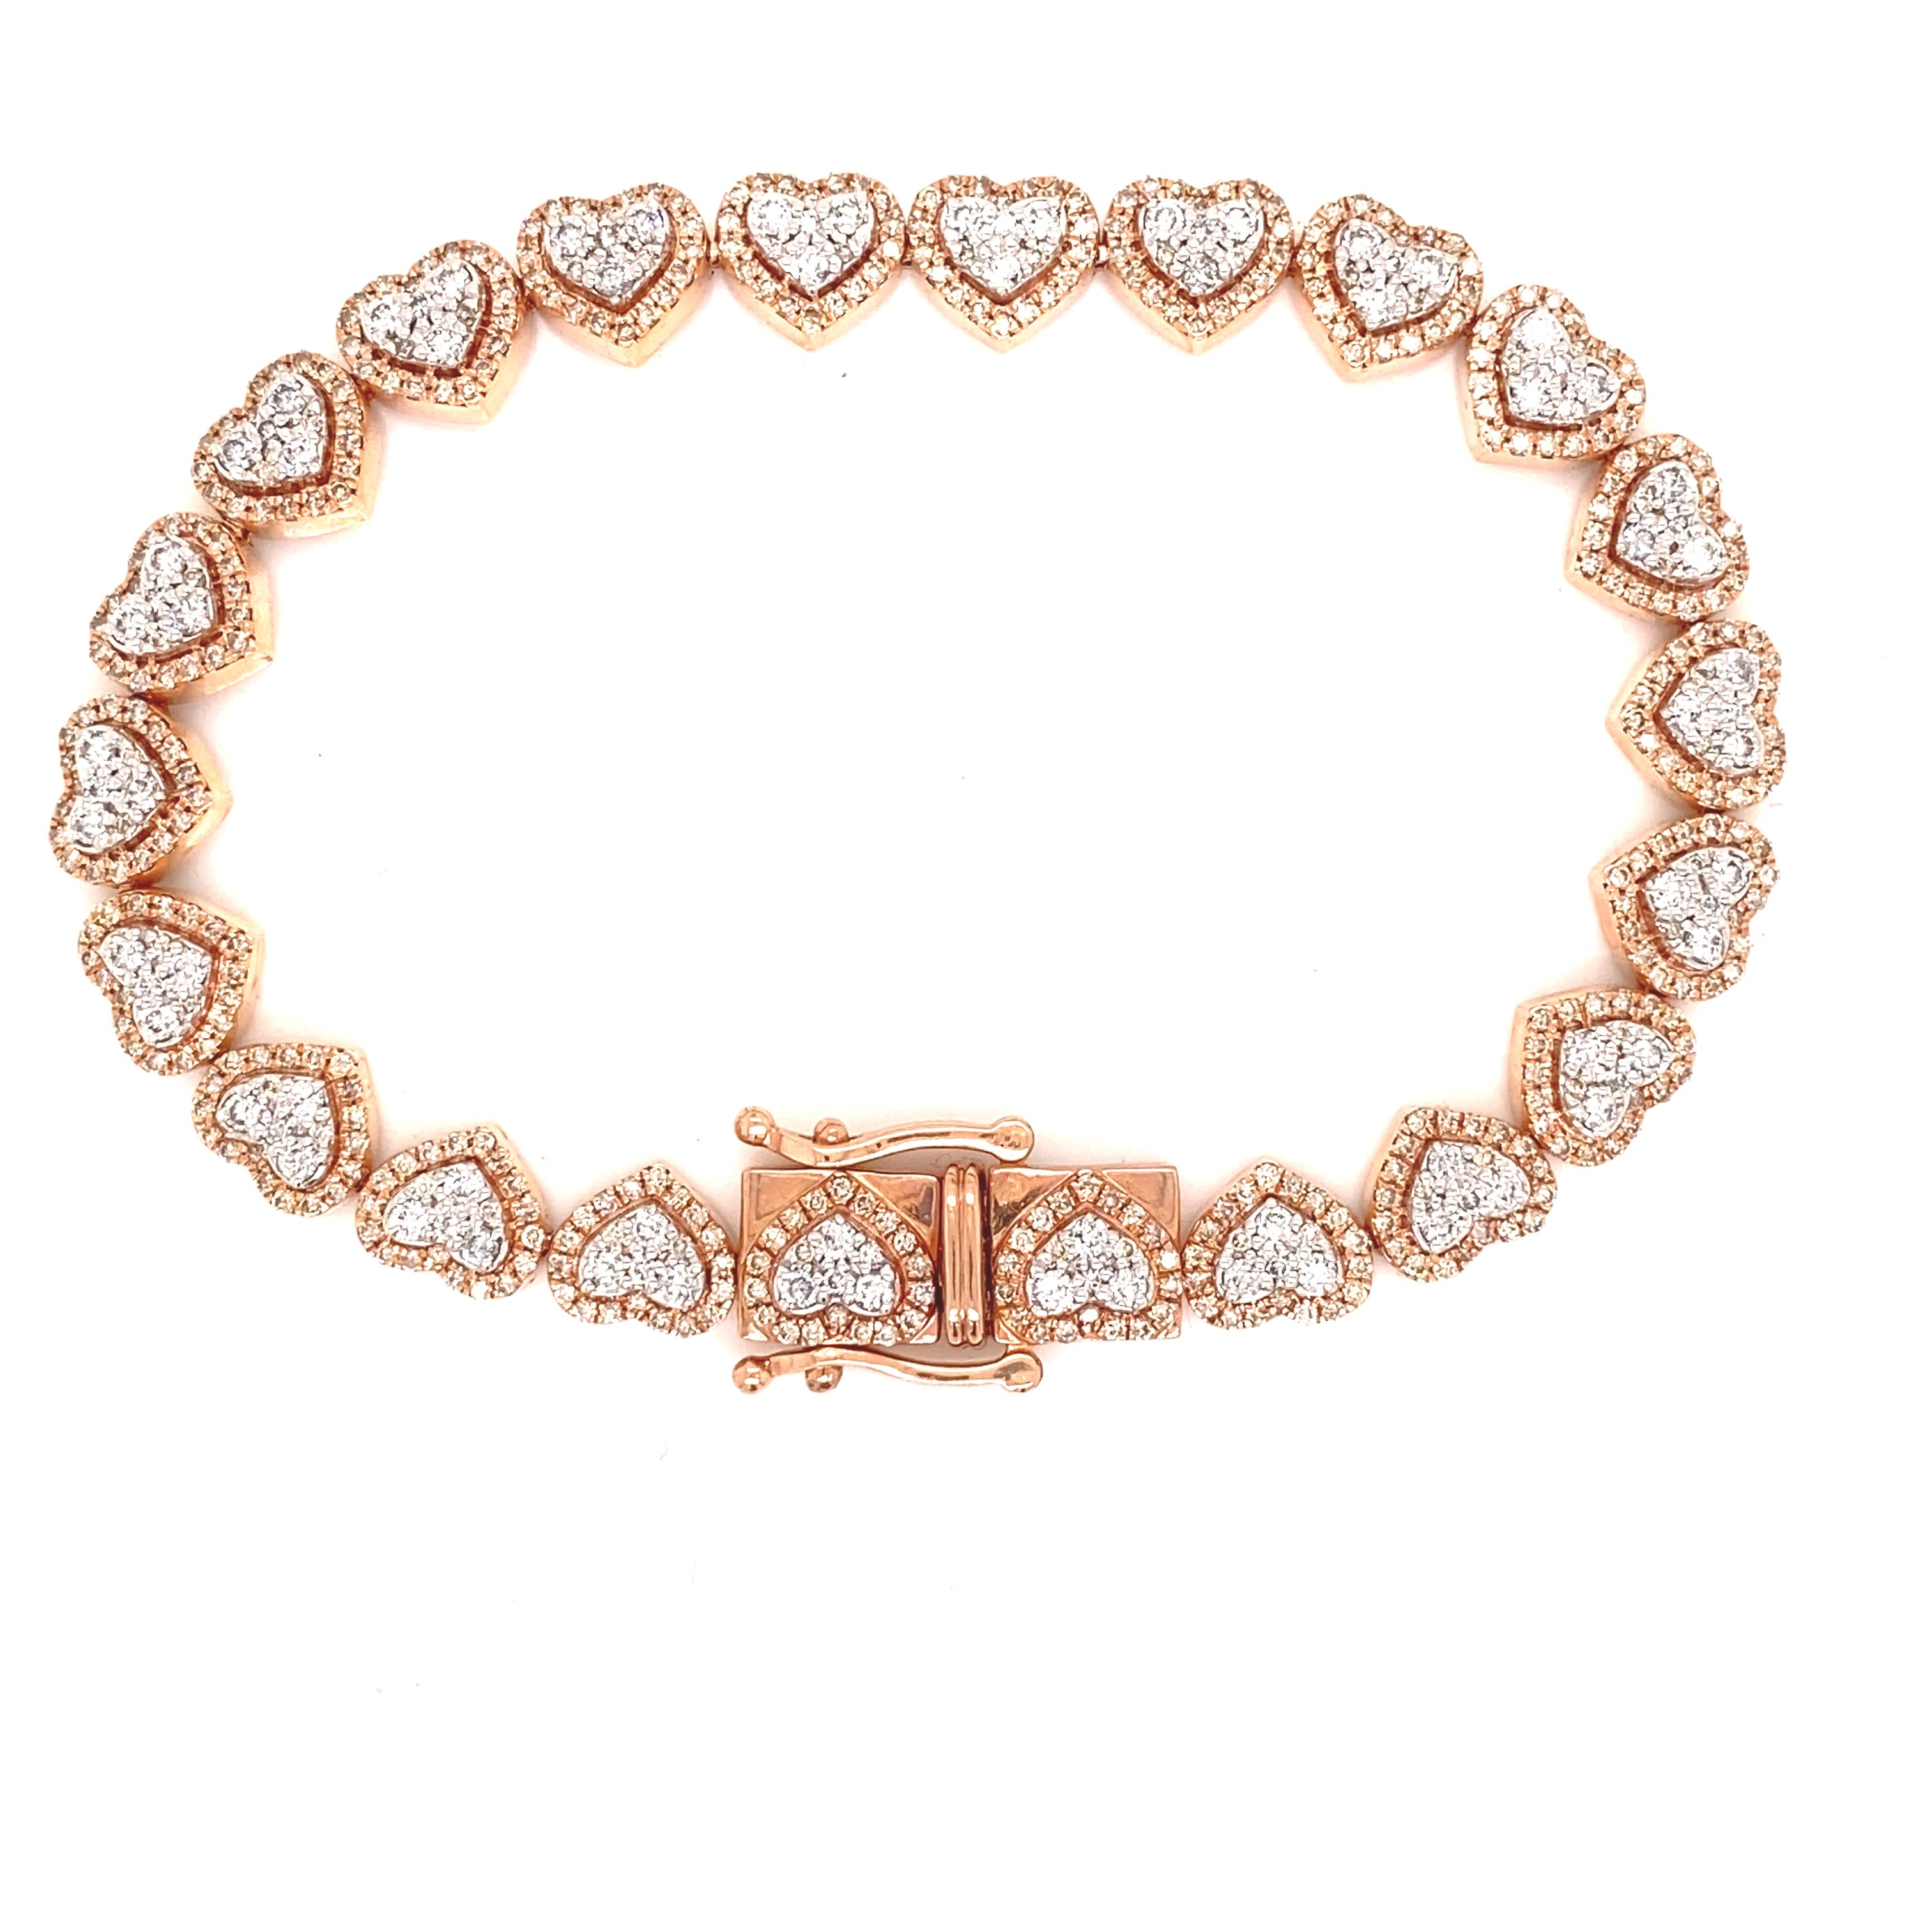 Fancy cut triangle and heart shape cz bracelet in rose gold finish -